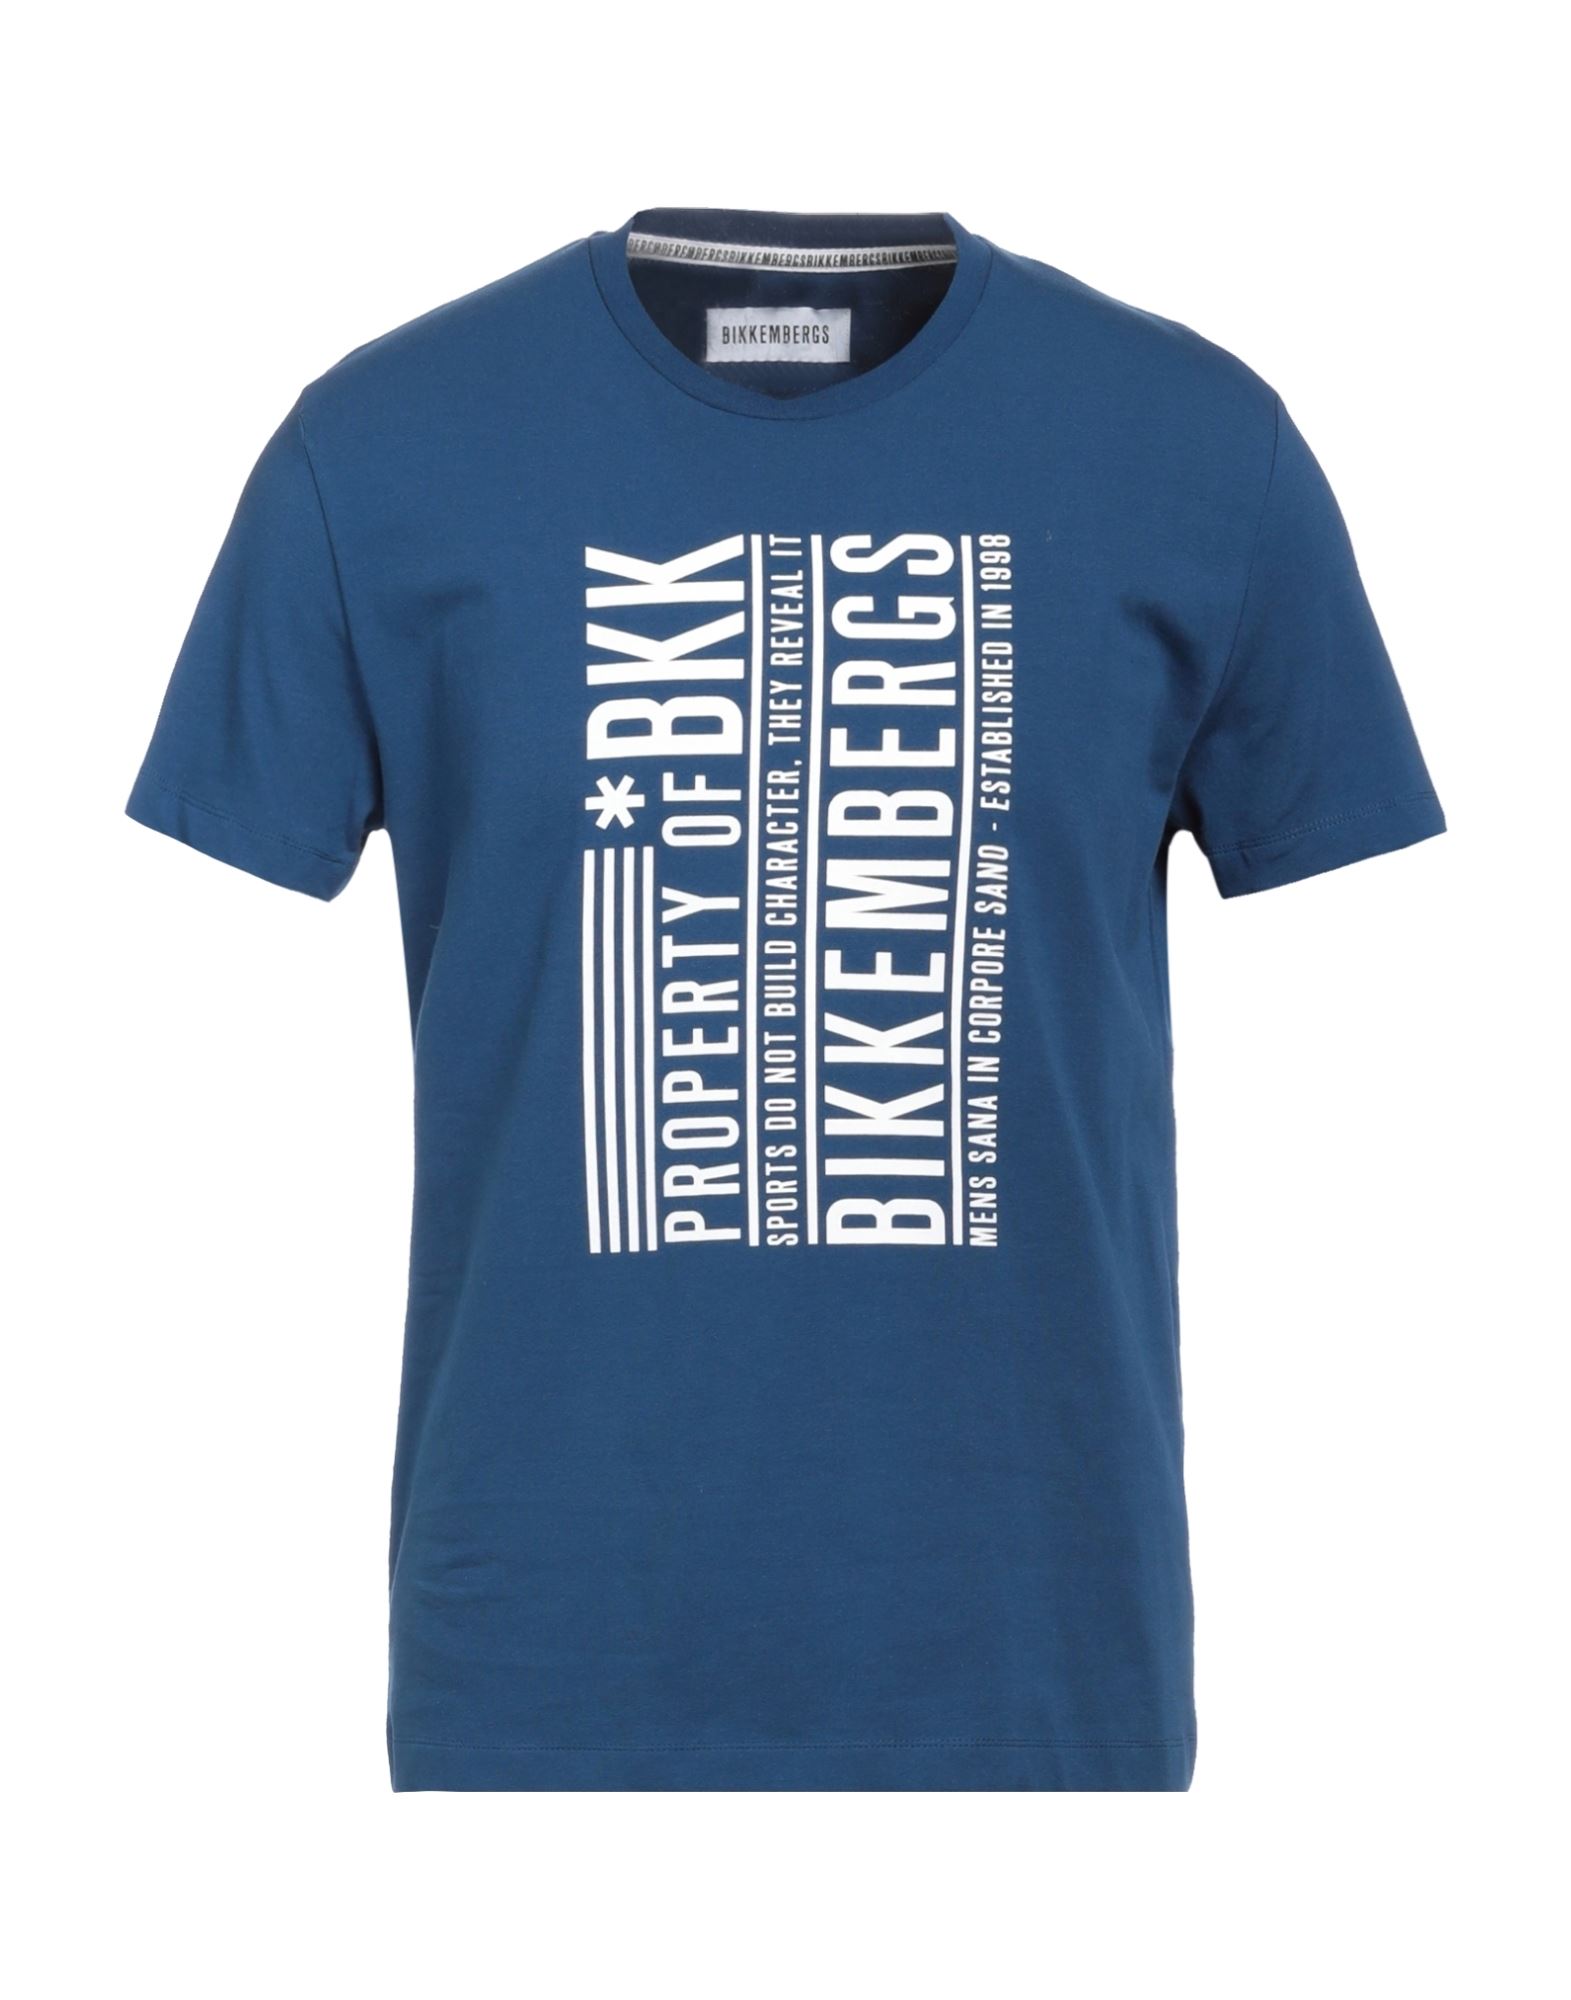 BIKKEMBERGS T-shirts Herren Blau von BIKKEMBERGS